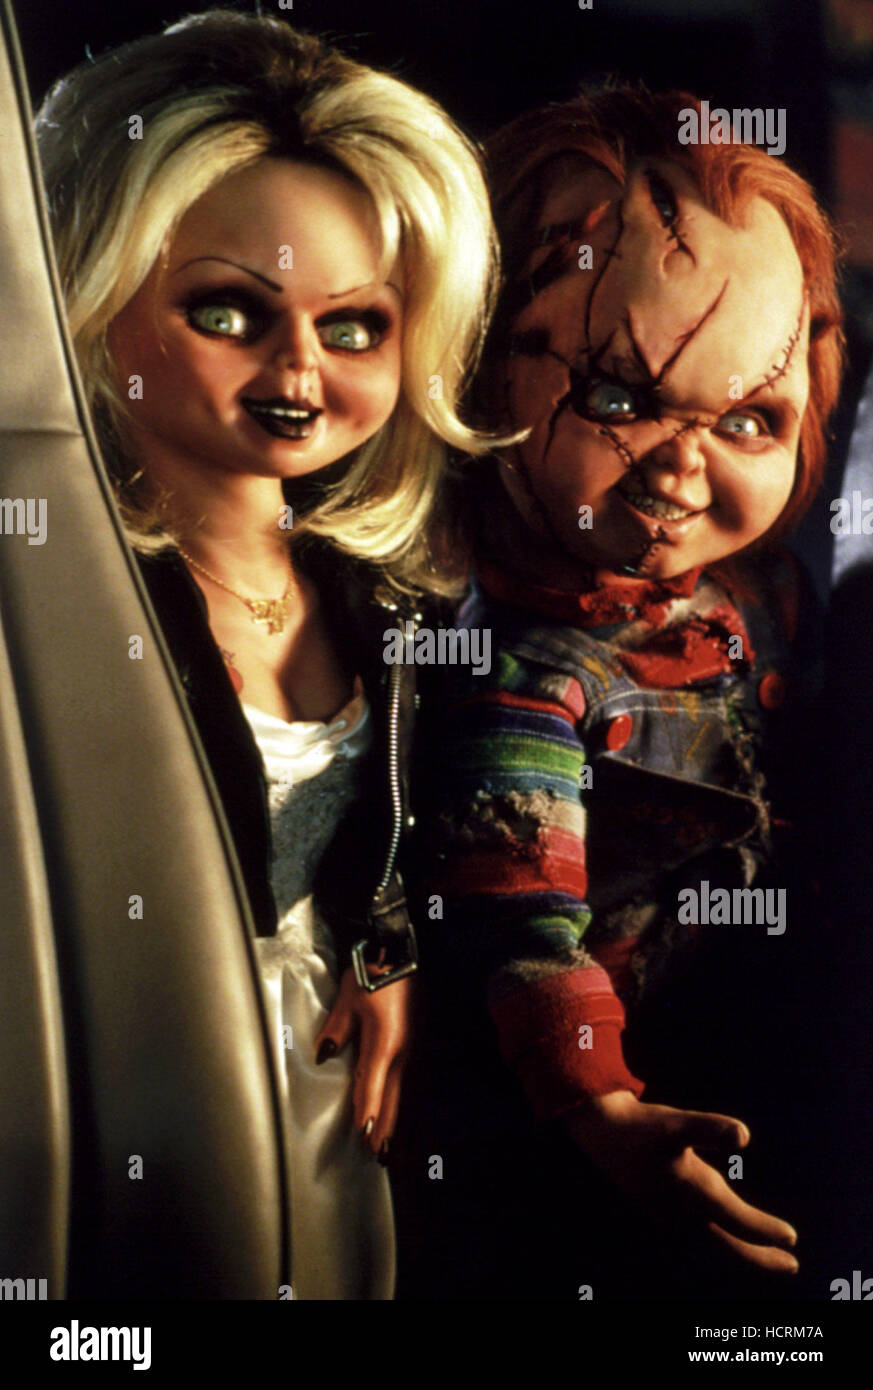 Sposa di Chucky, Tiffany, Chucky, 1998 Foto stock - Alamy